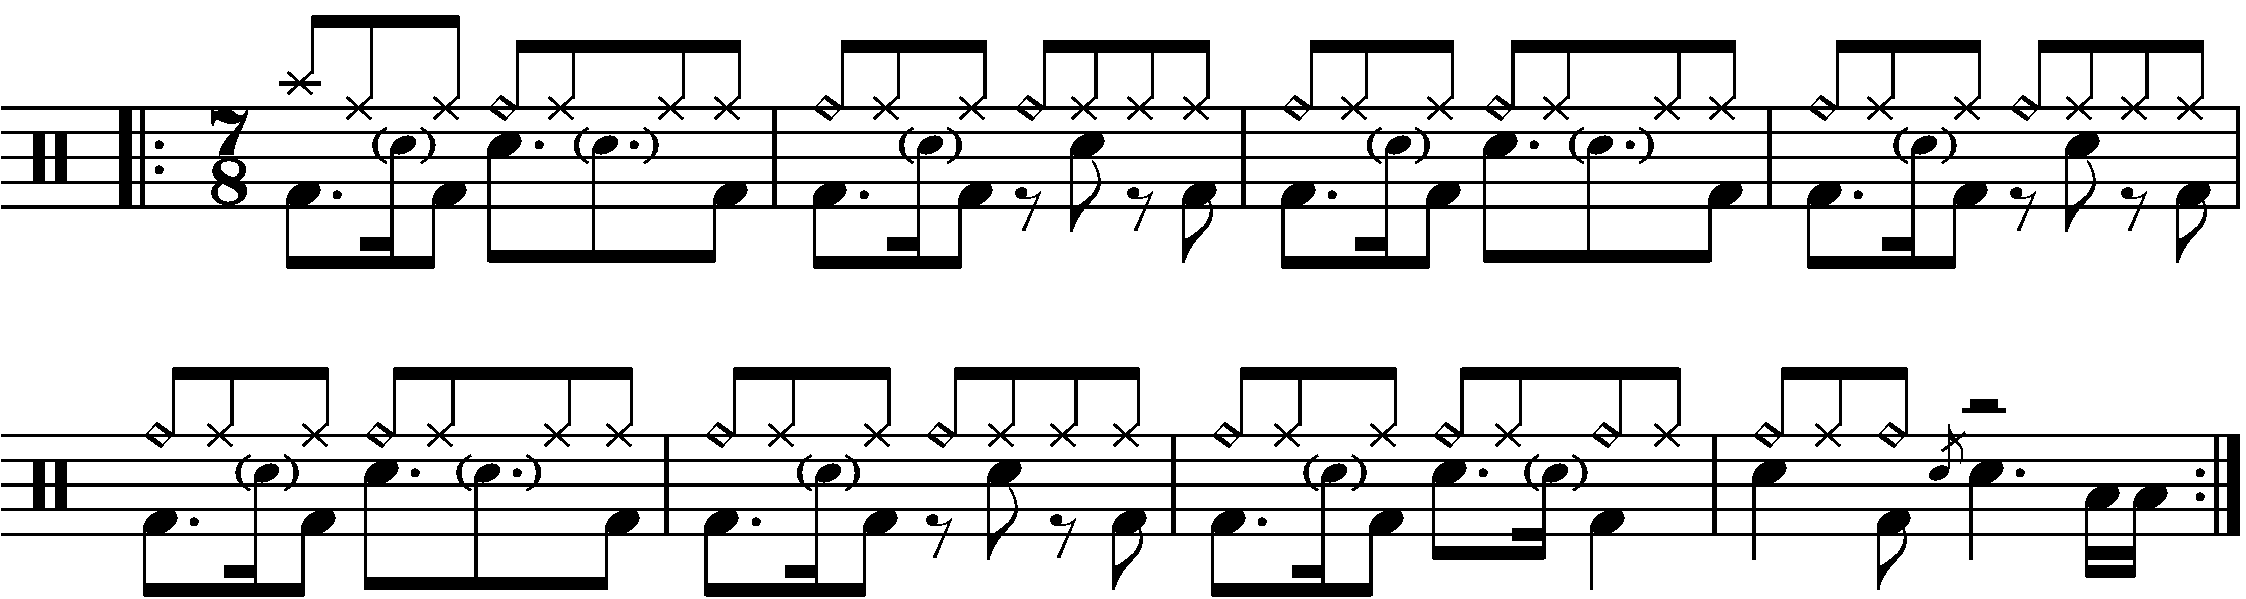 An eight bar phrase built of an AAAB pattern using 2 bar 7/8 grooves